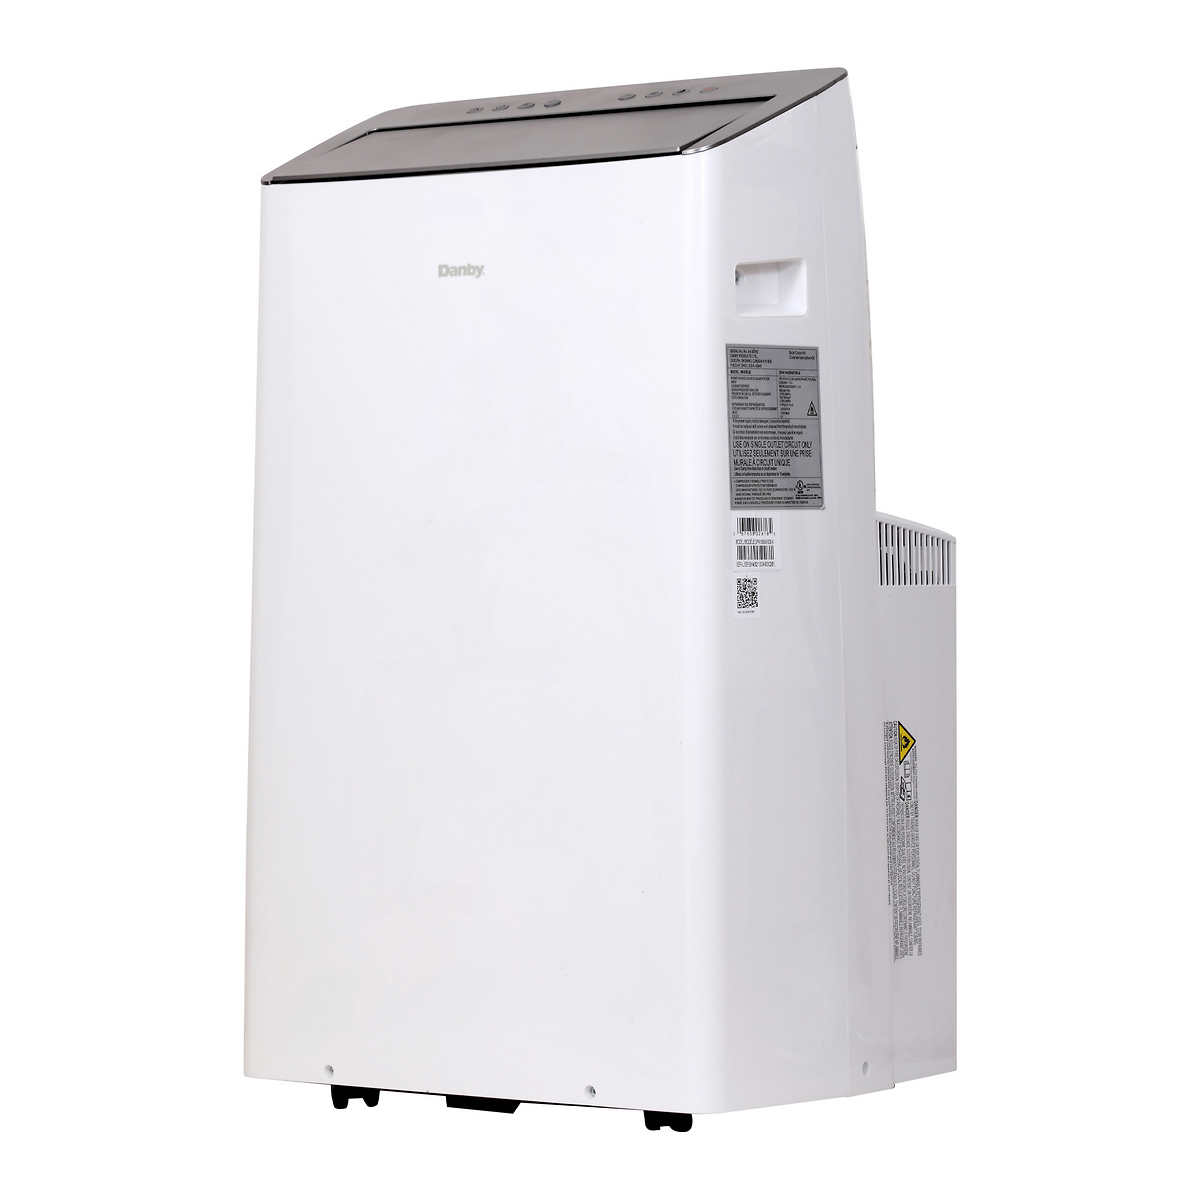 Costco Members: Danby 10,000 BTU (SACC) 3-in-1 Inverter Portable Air Conditioner $439.99